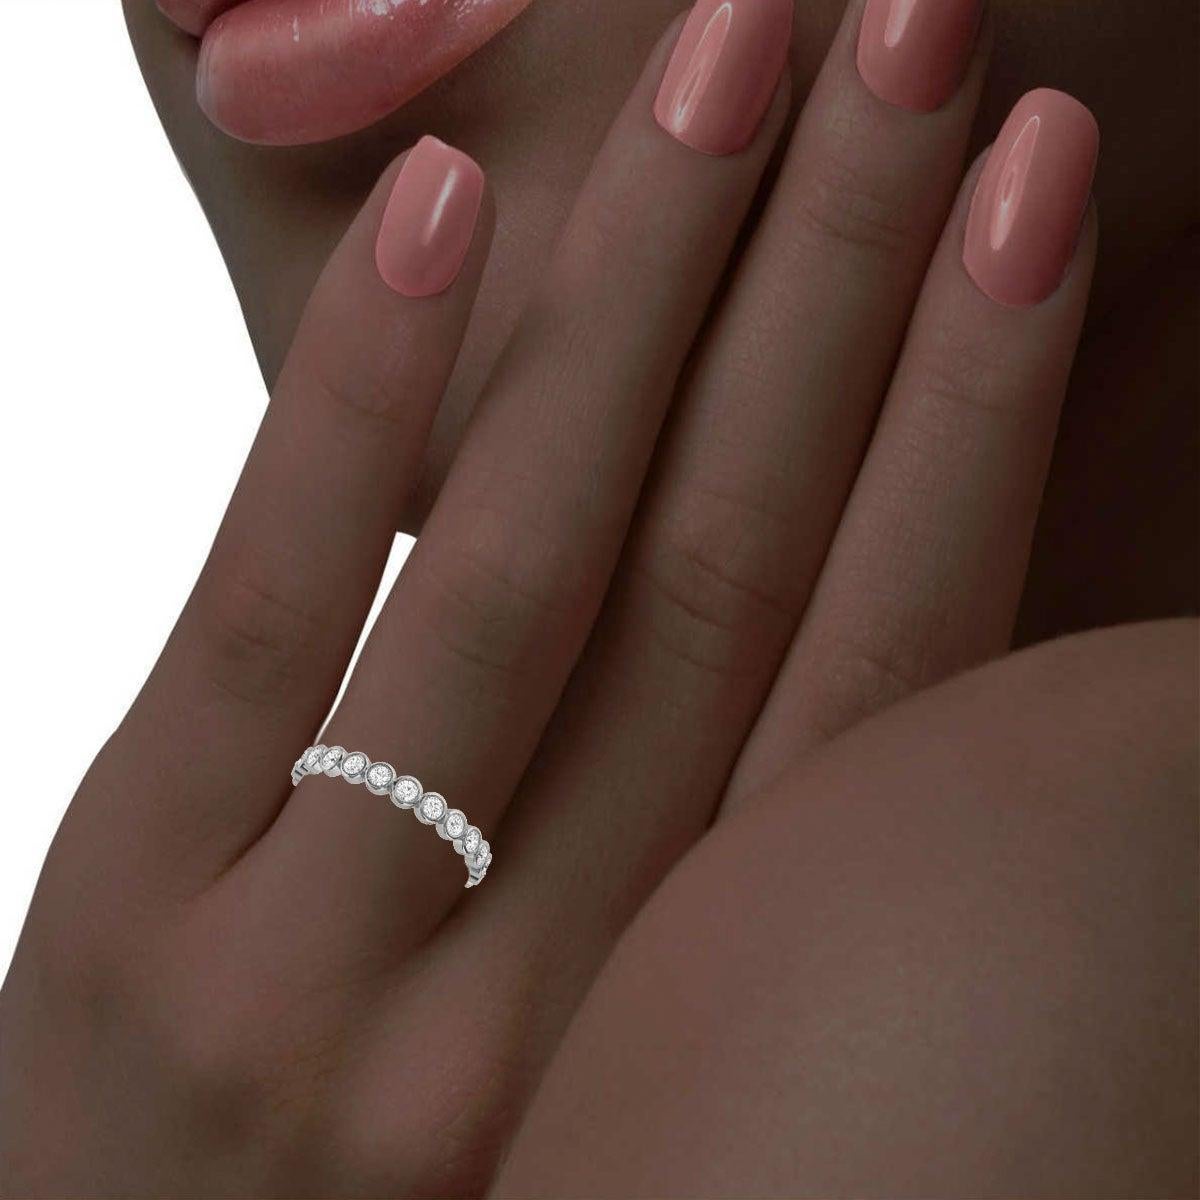 For Sale:  18k White Gold Petite Zivit Eternity Diamond Ring '1/2 Ct. Tw' 4